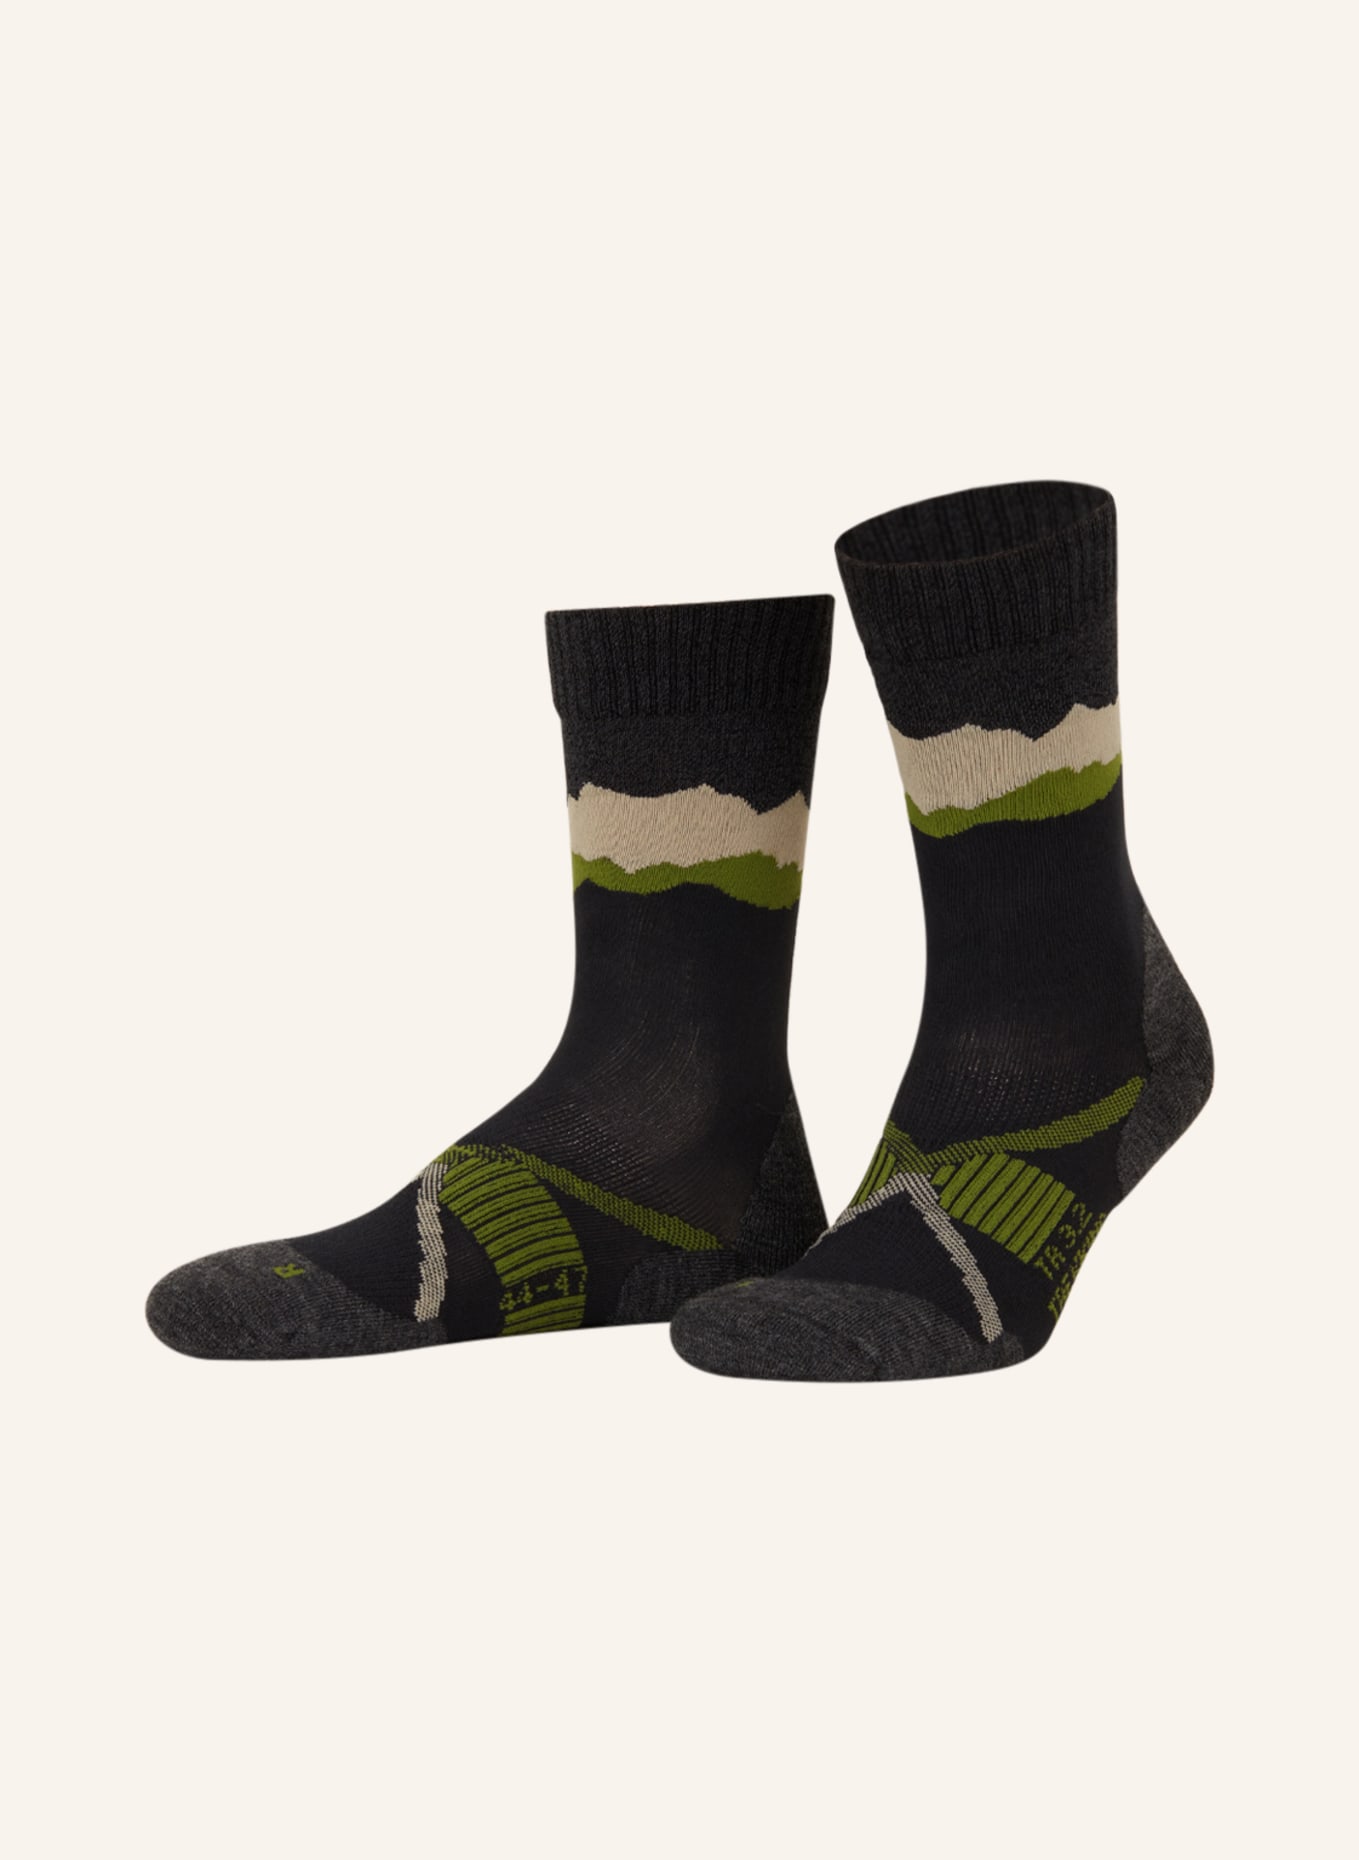 P.A.C. Trekking-Socken TR 3.2 LIGHT, Farbe: 222 Anthracite-Olive (Bild 1)